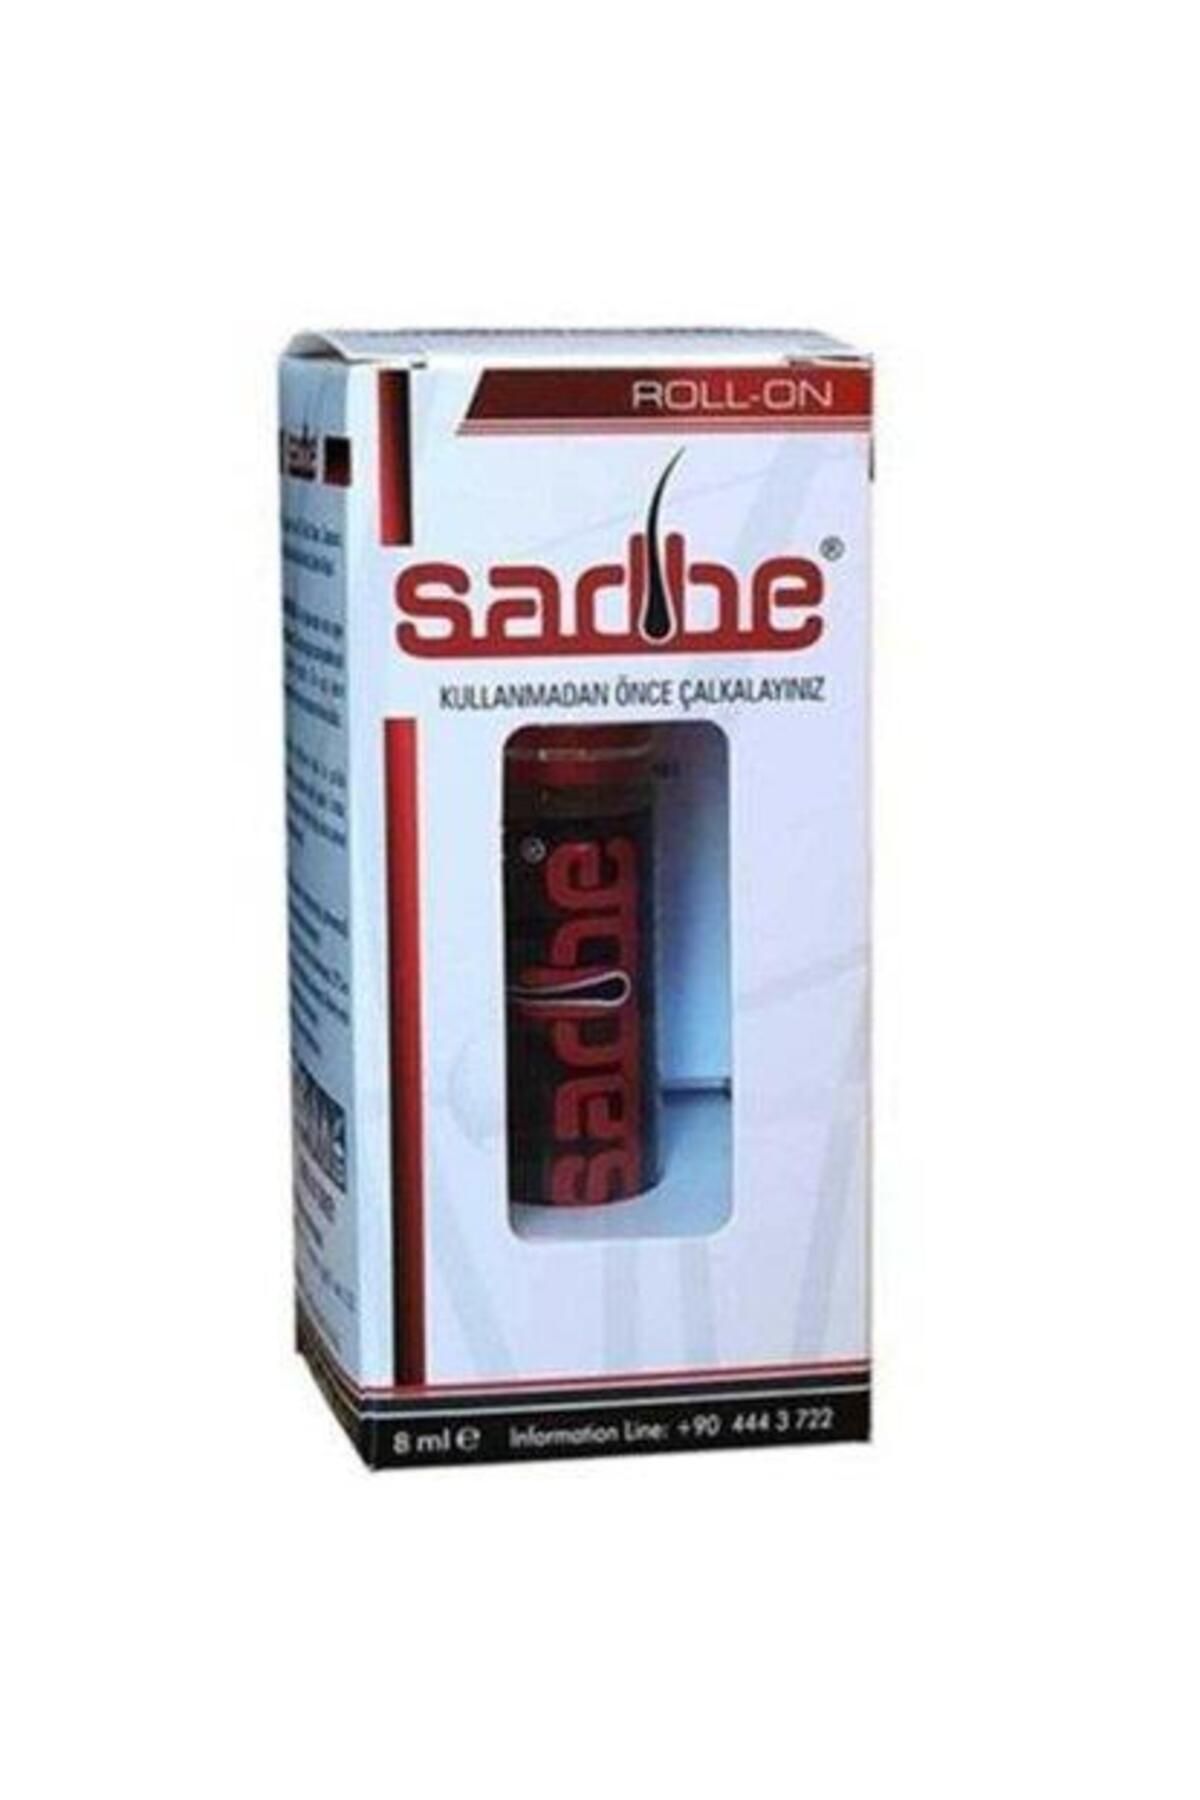 Sadbee Sadbe Roll-on 8 ml